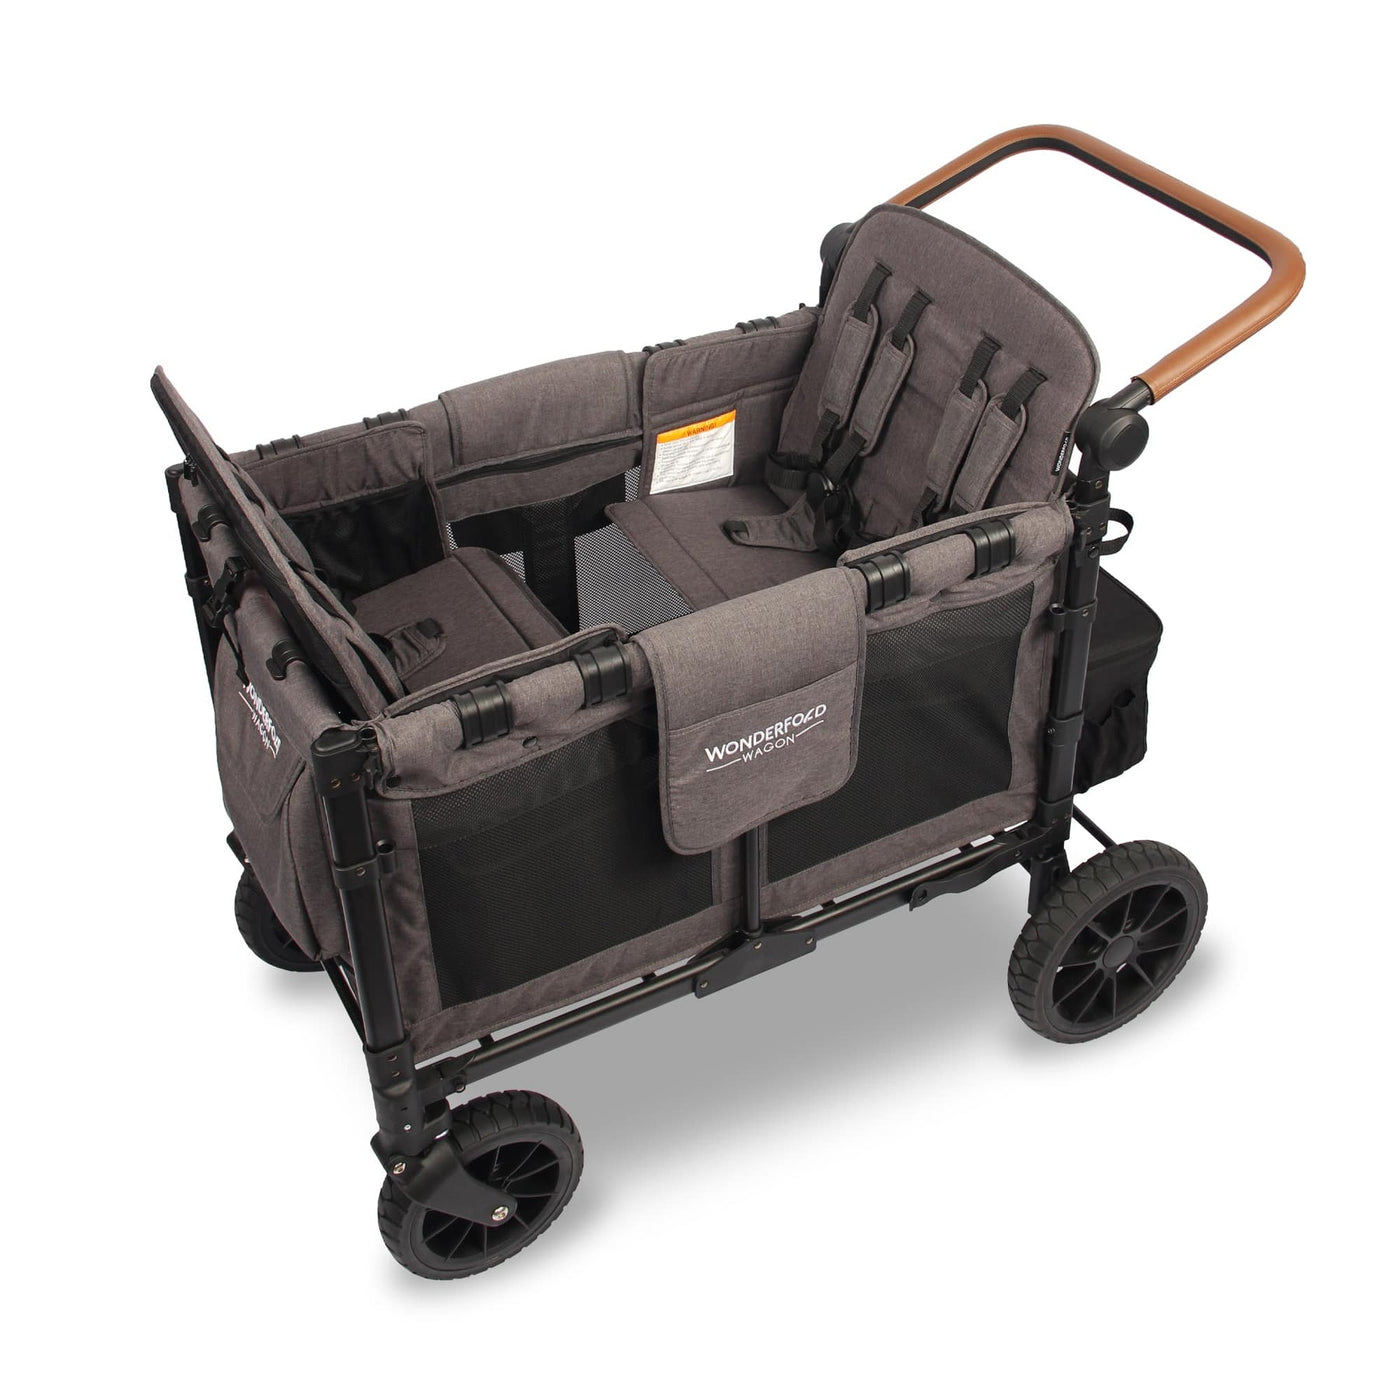 Wonderfold Wagon W4 Luxe Quad Stroller Wagon (4 Seater) - Grey